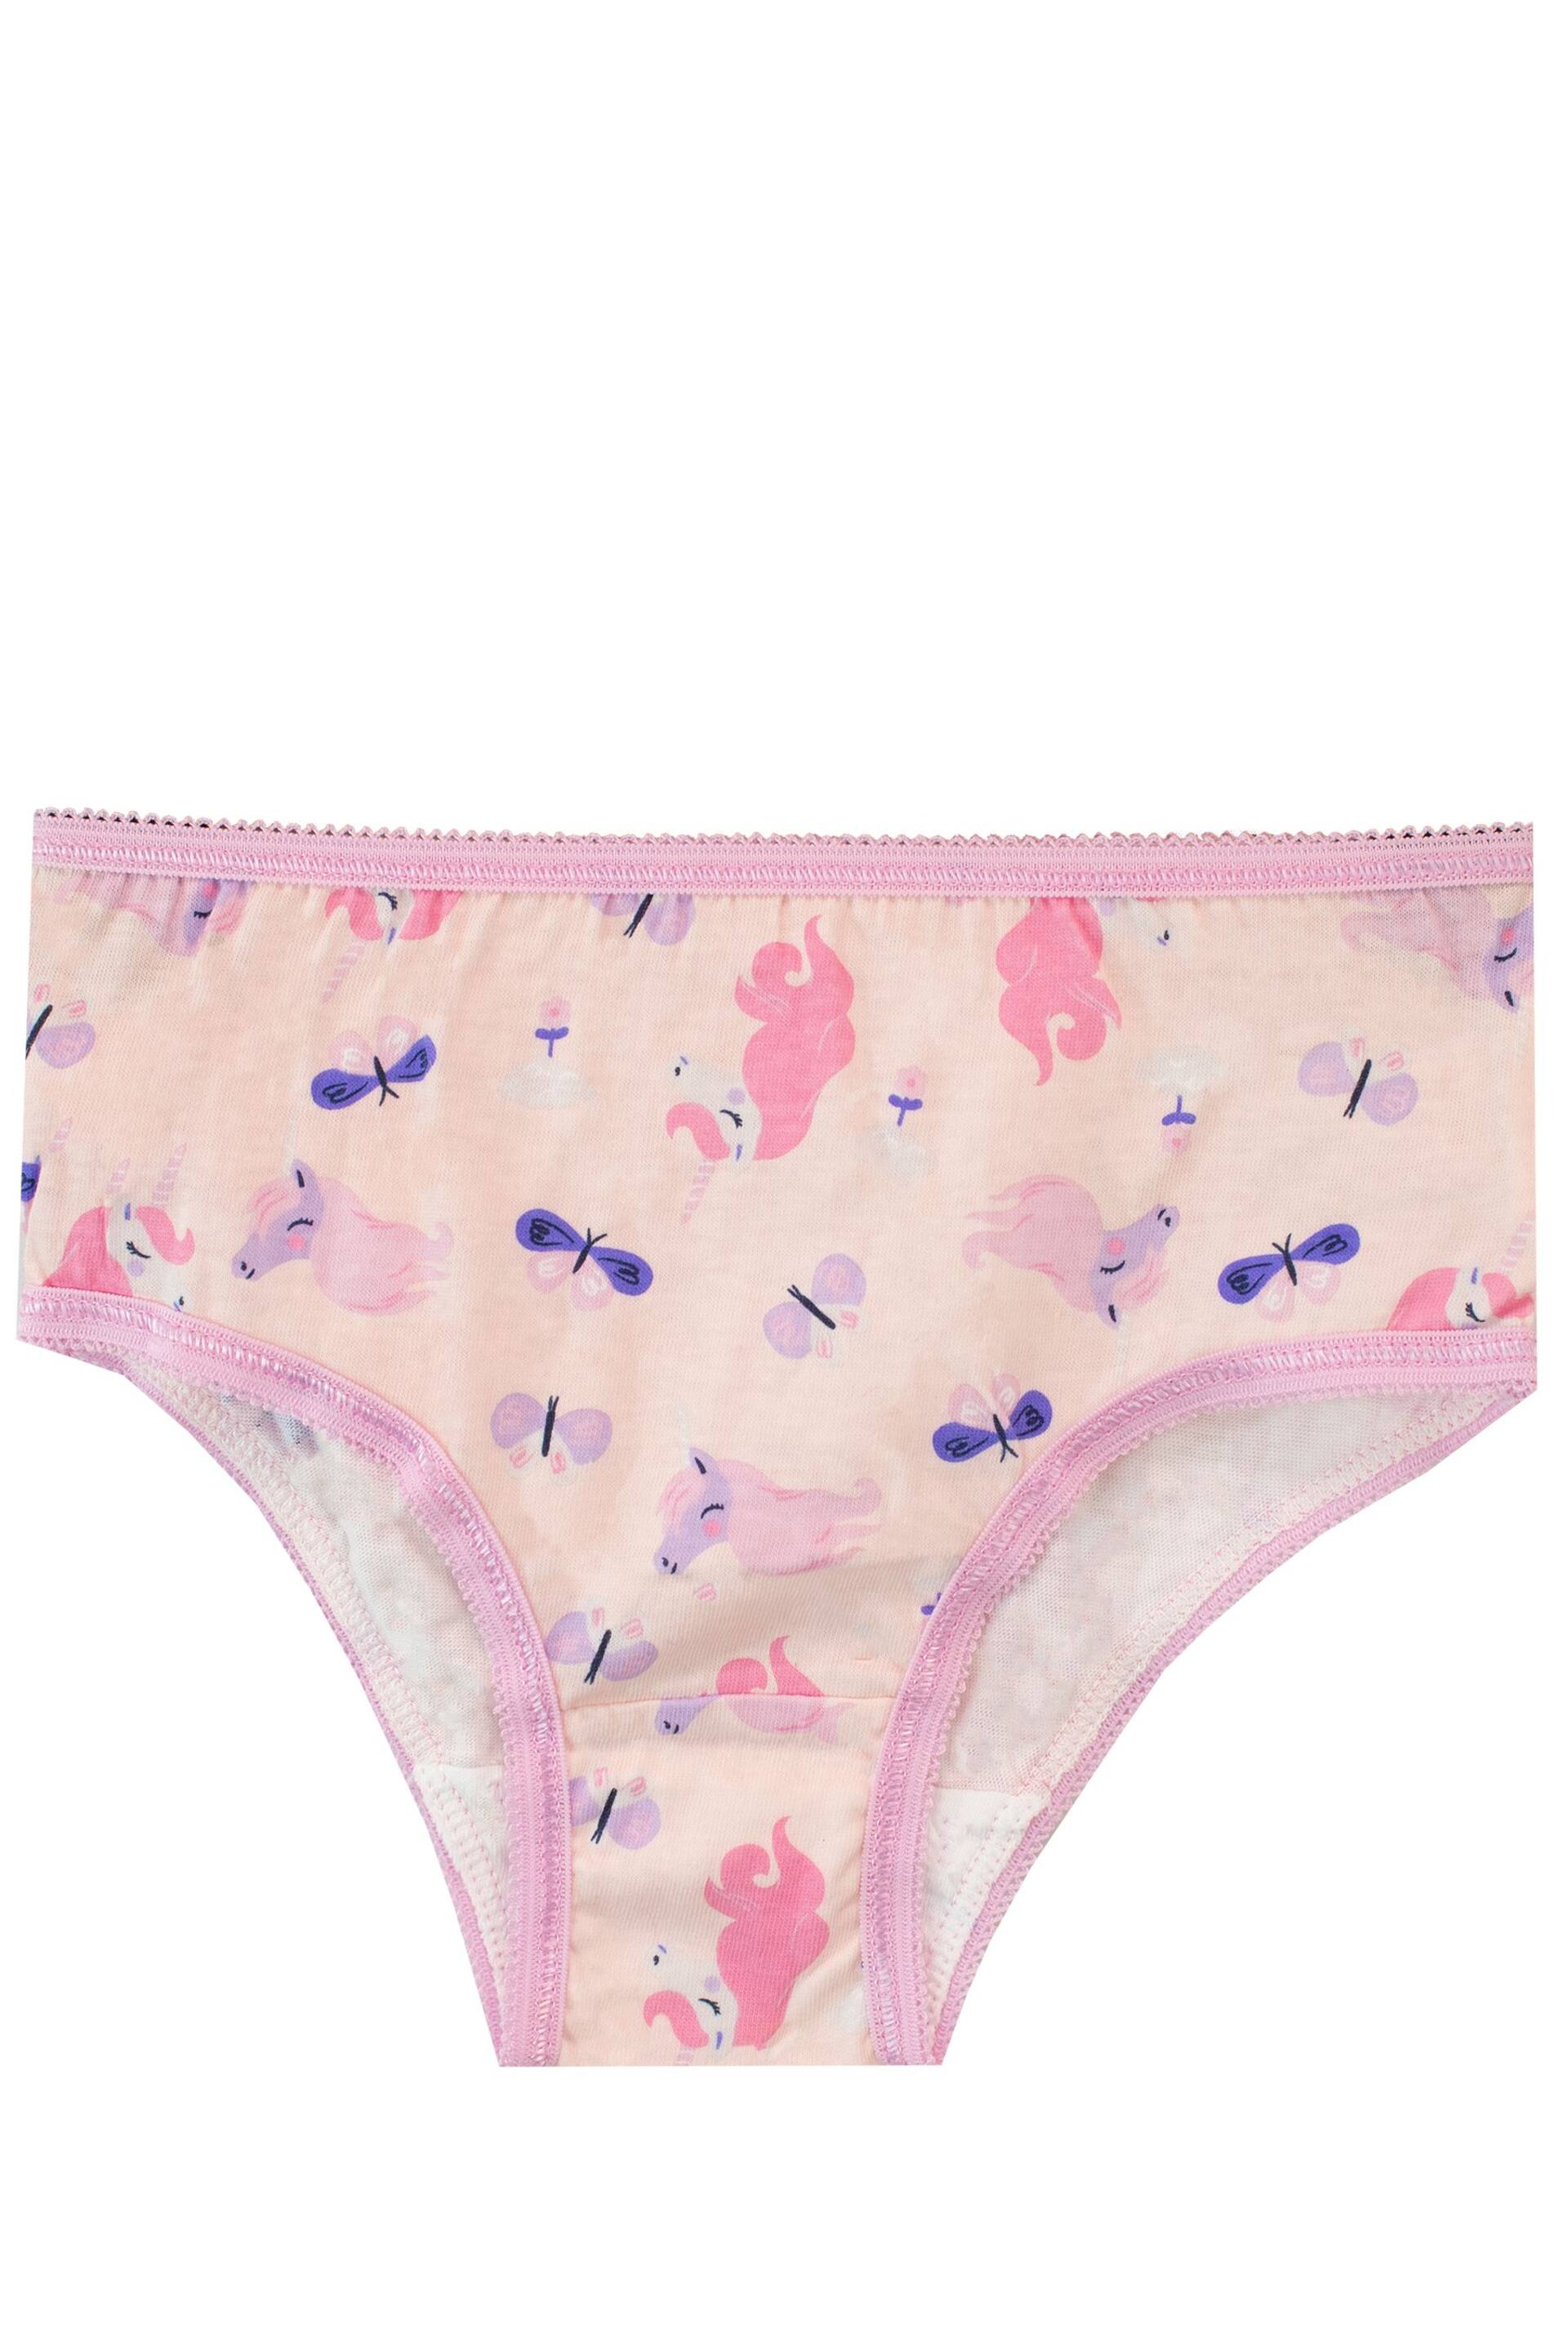 Harry Bear Pink Girls Unicorn Underwear 5 Packs - Image 2 of 5